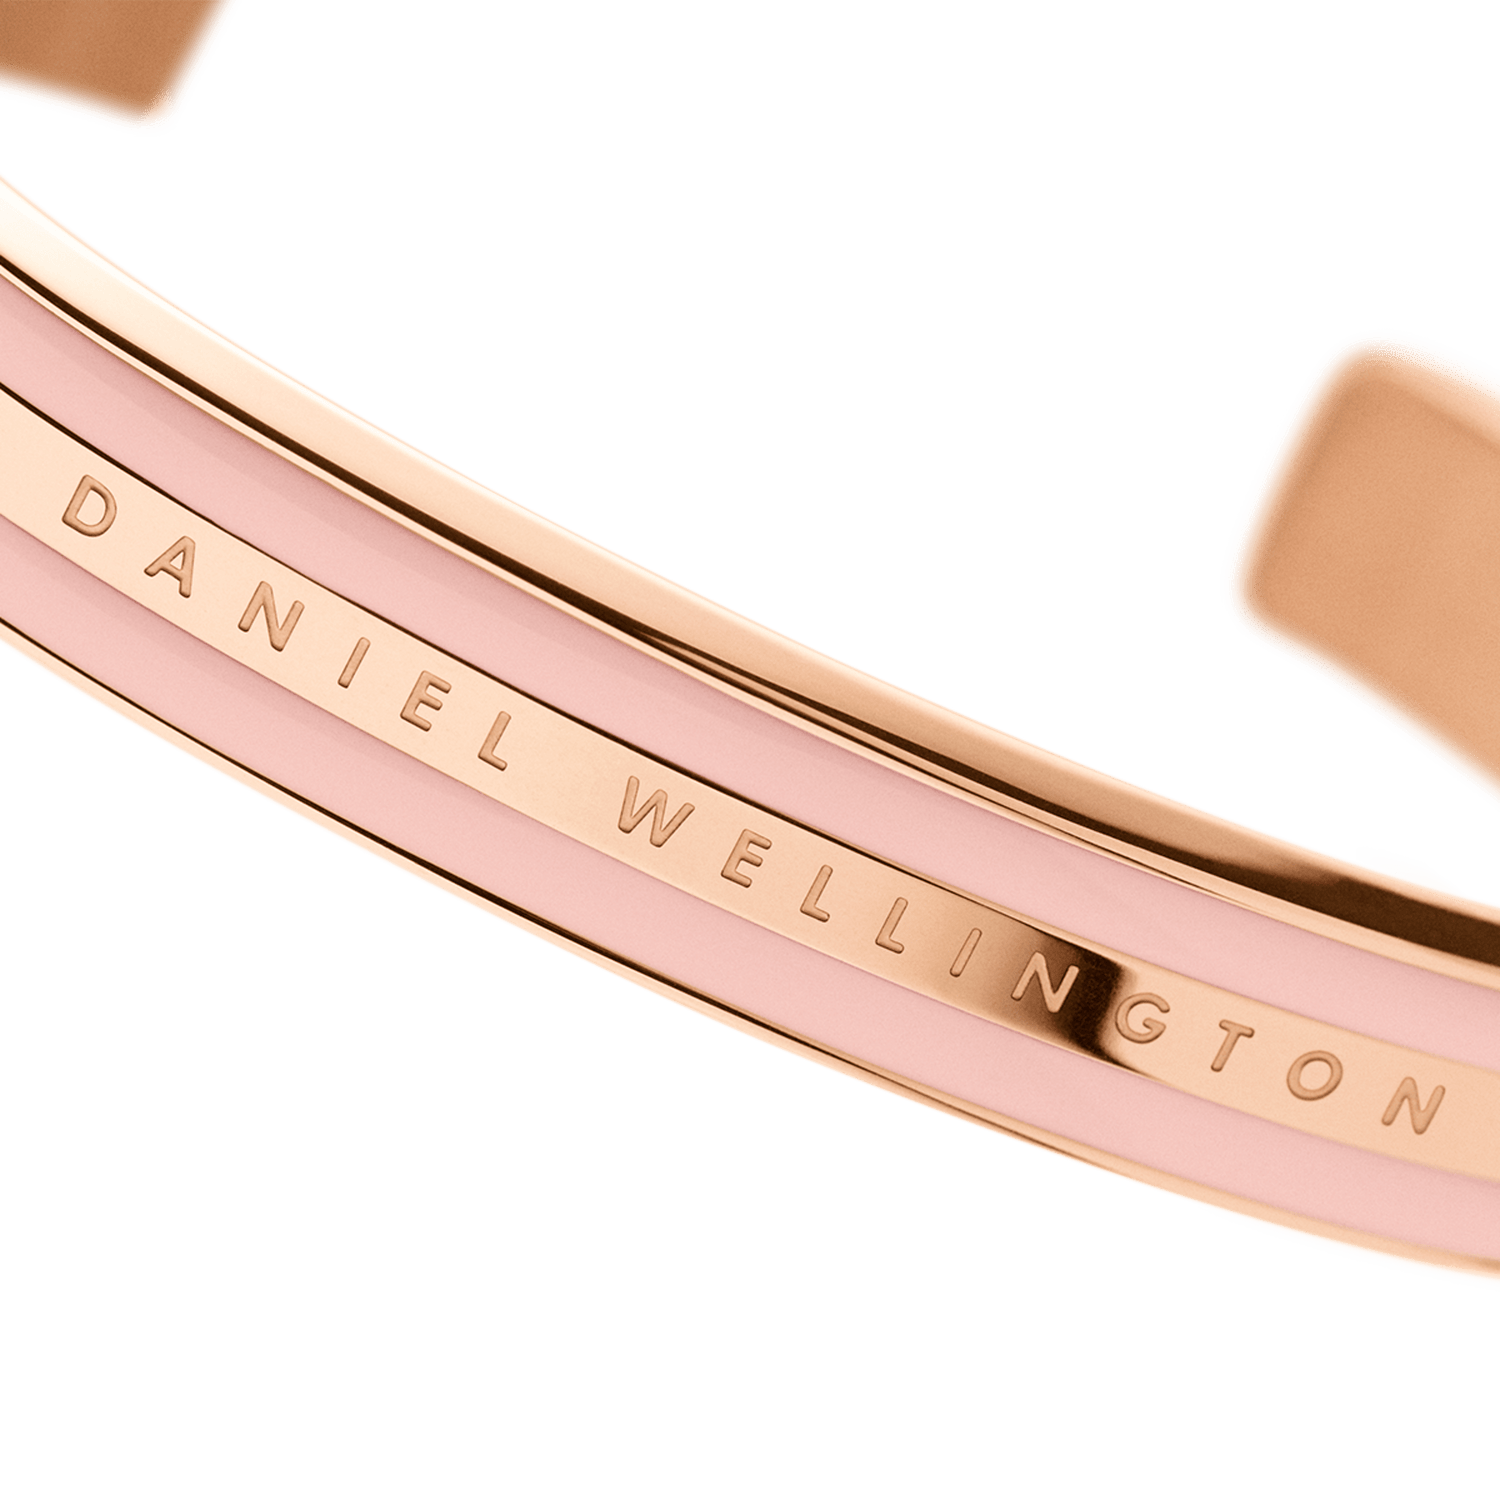 Jewellery - Emalie bracelet - rose gold & pink - Size M | DW